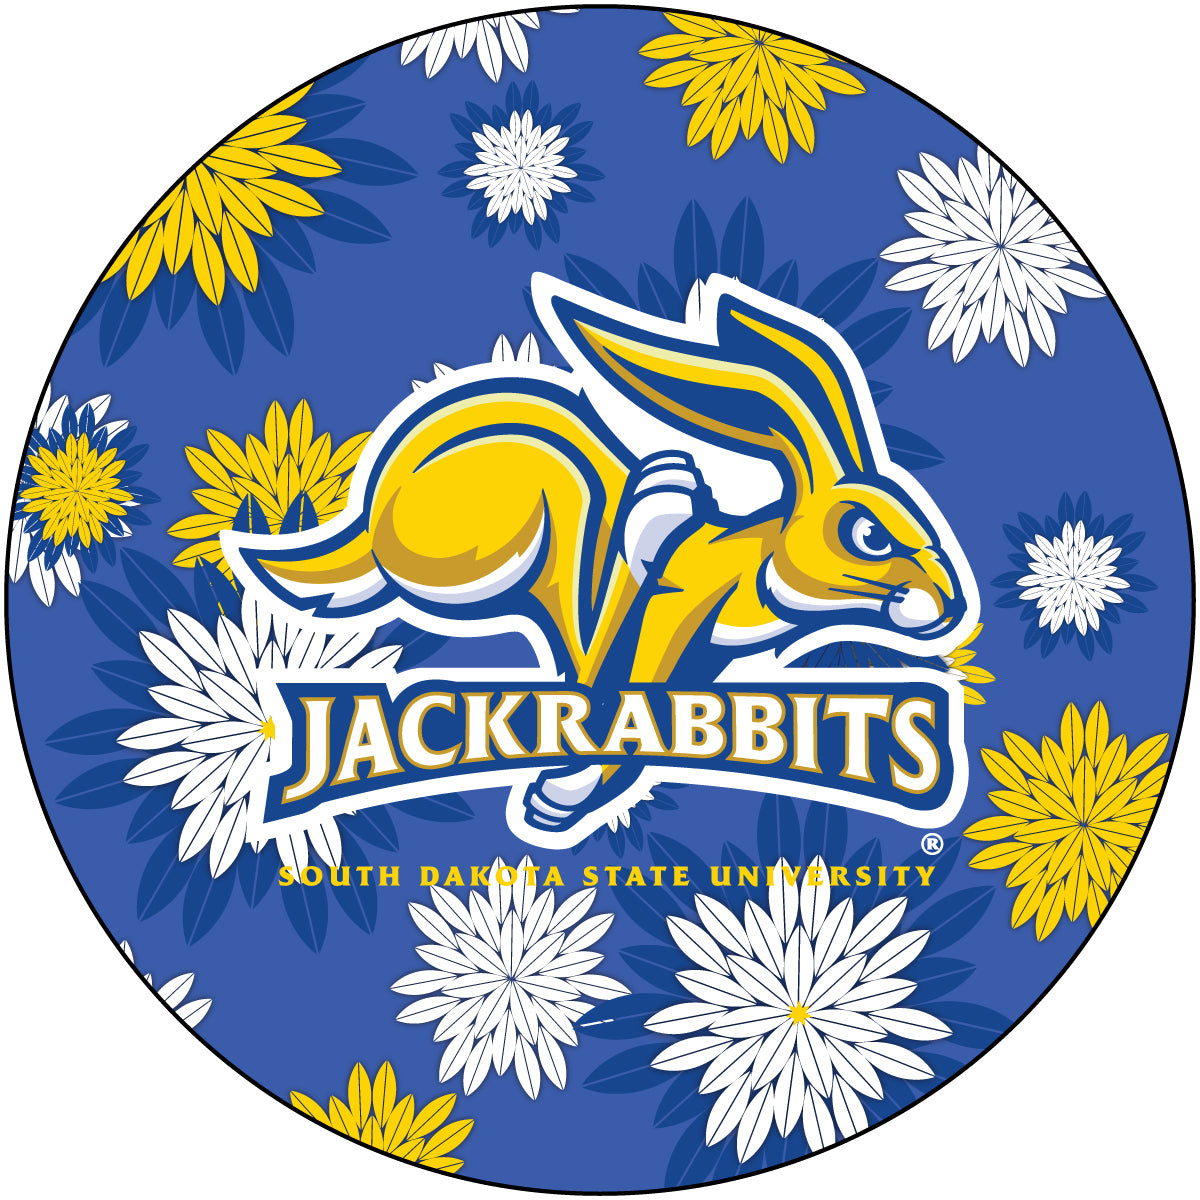 South Dakota State Jackrabbits 4 Inch Round Floral Magnet